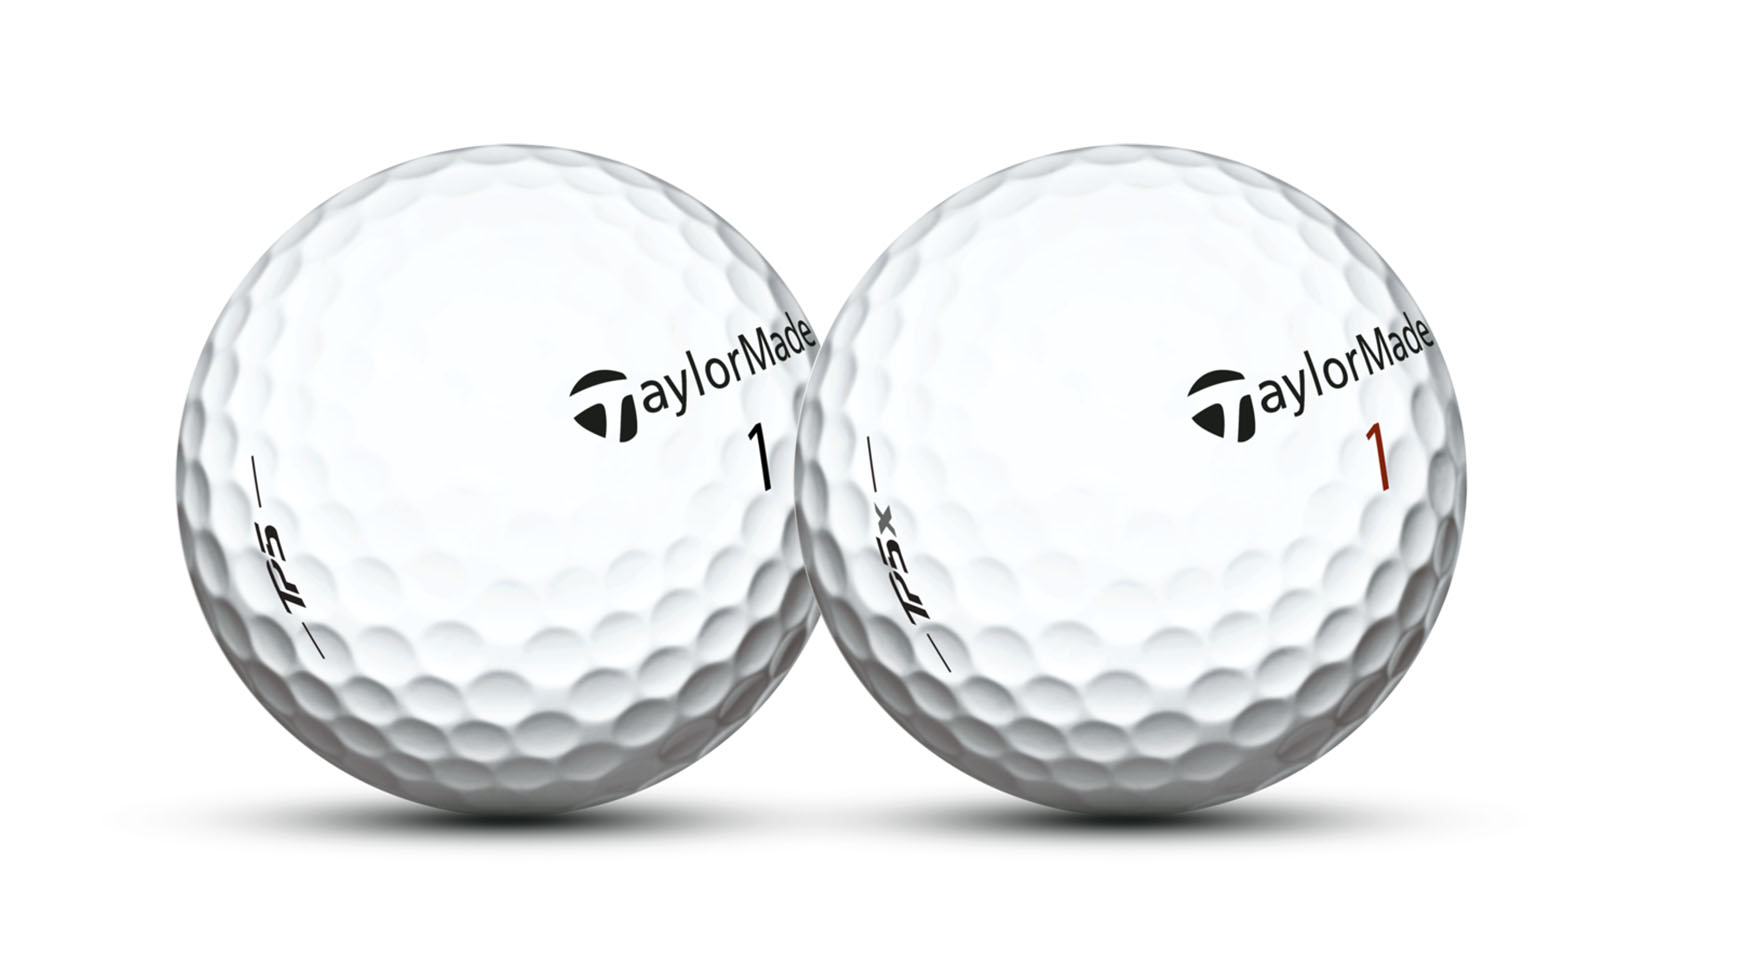 TaylorMade unveil new TP5 & TP5x golf balls